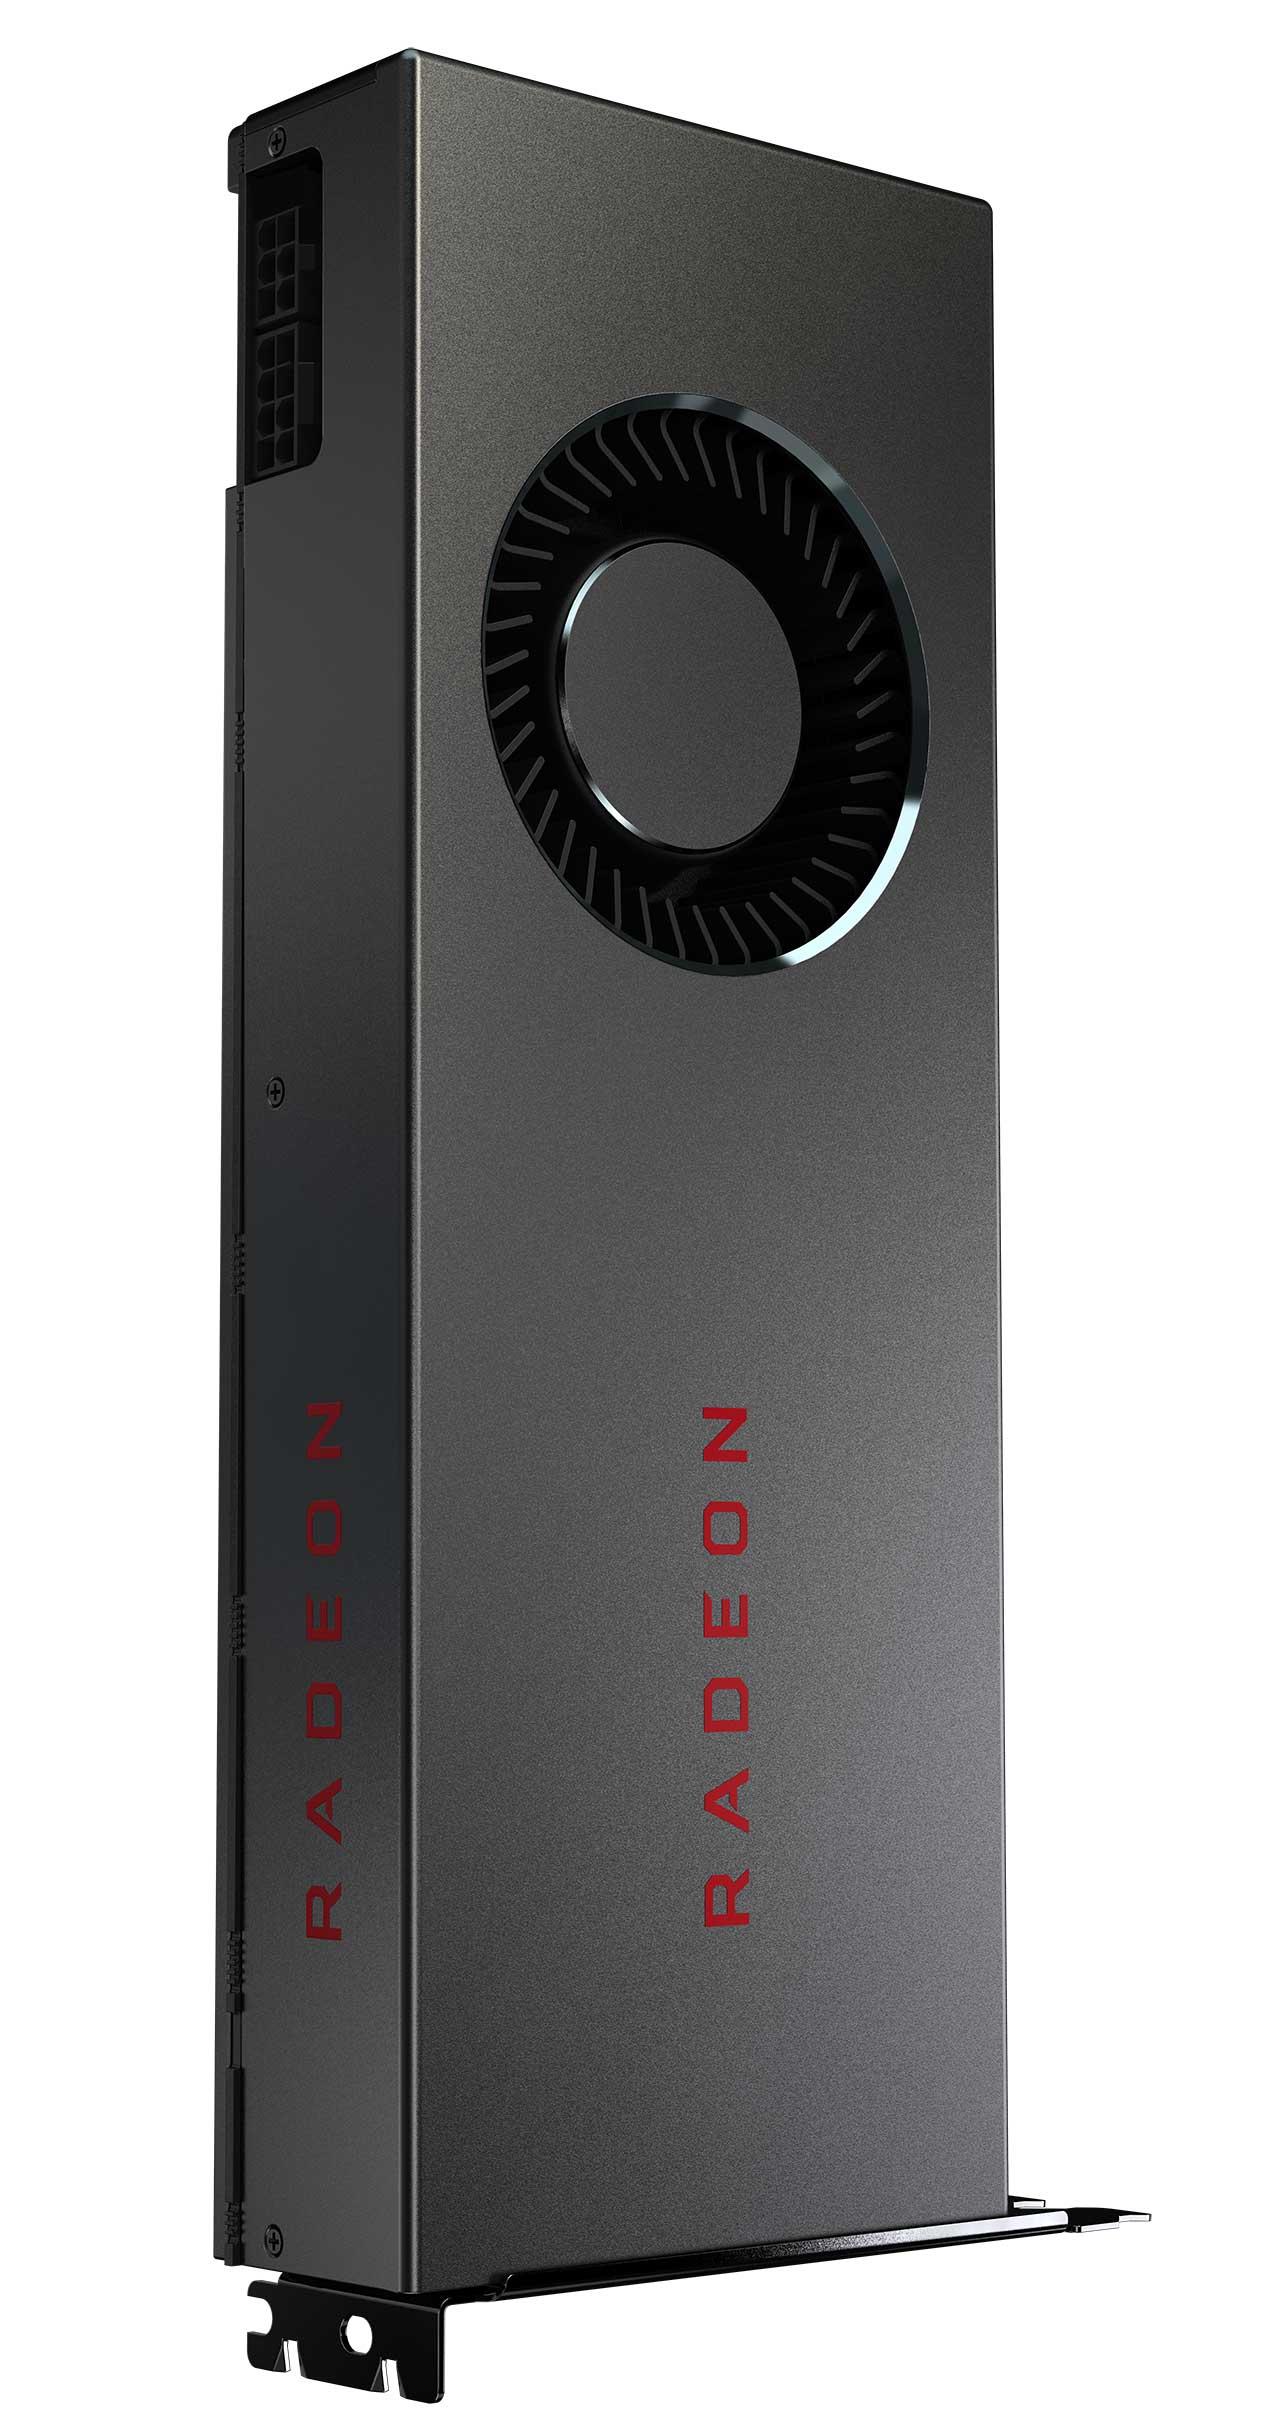 AMD-Radeon-RX-5700-Graphics-Card-1